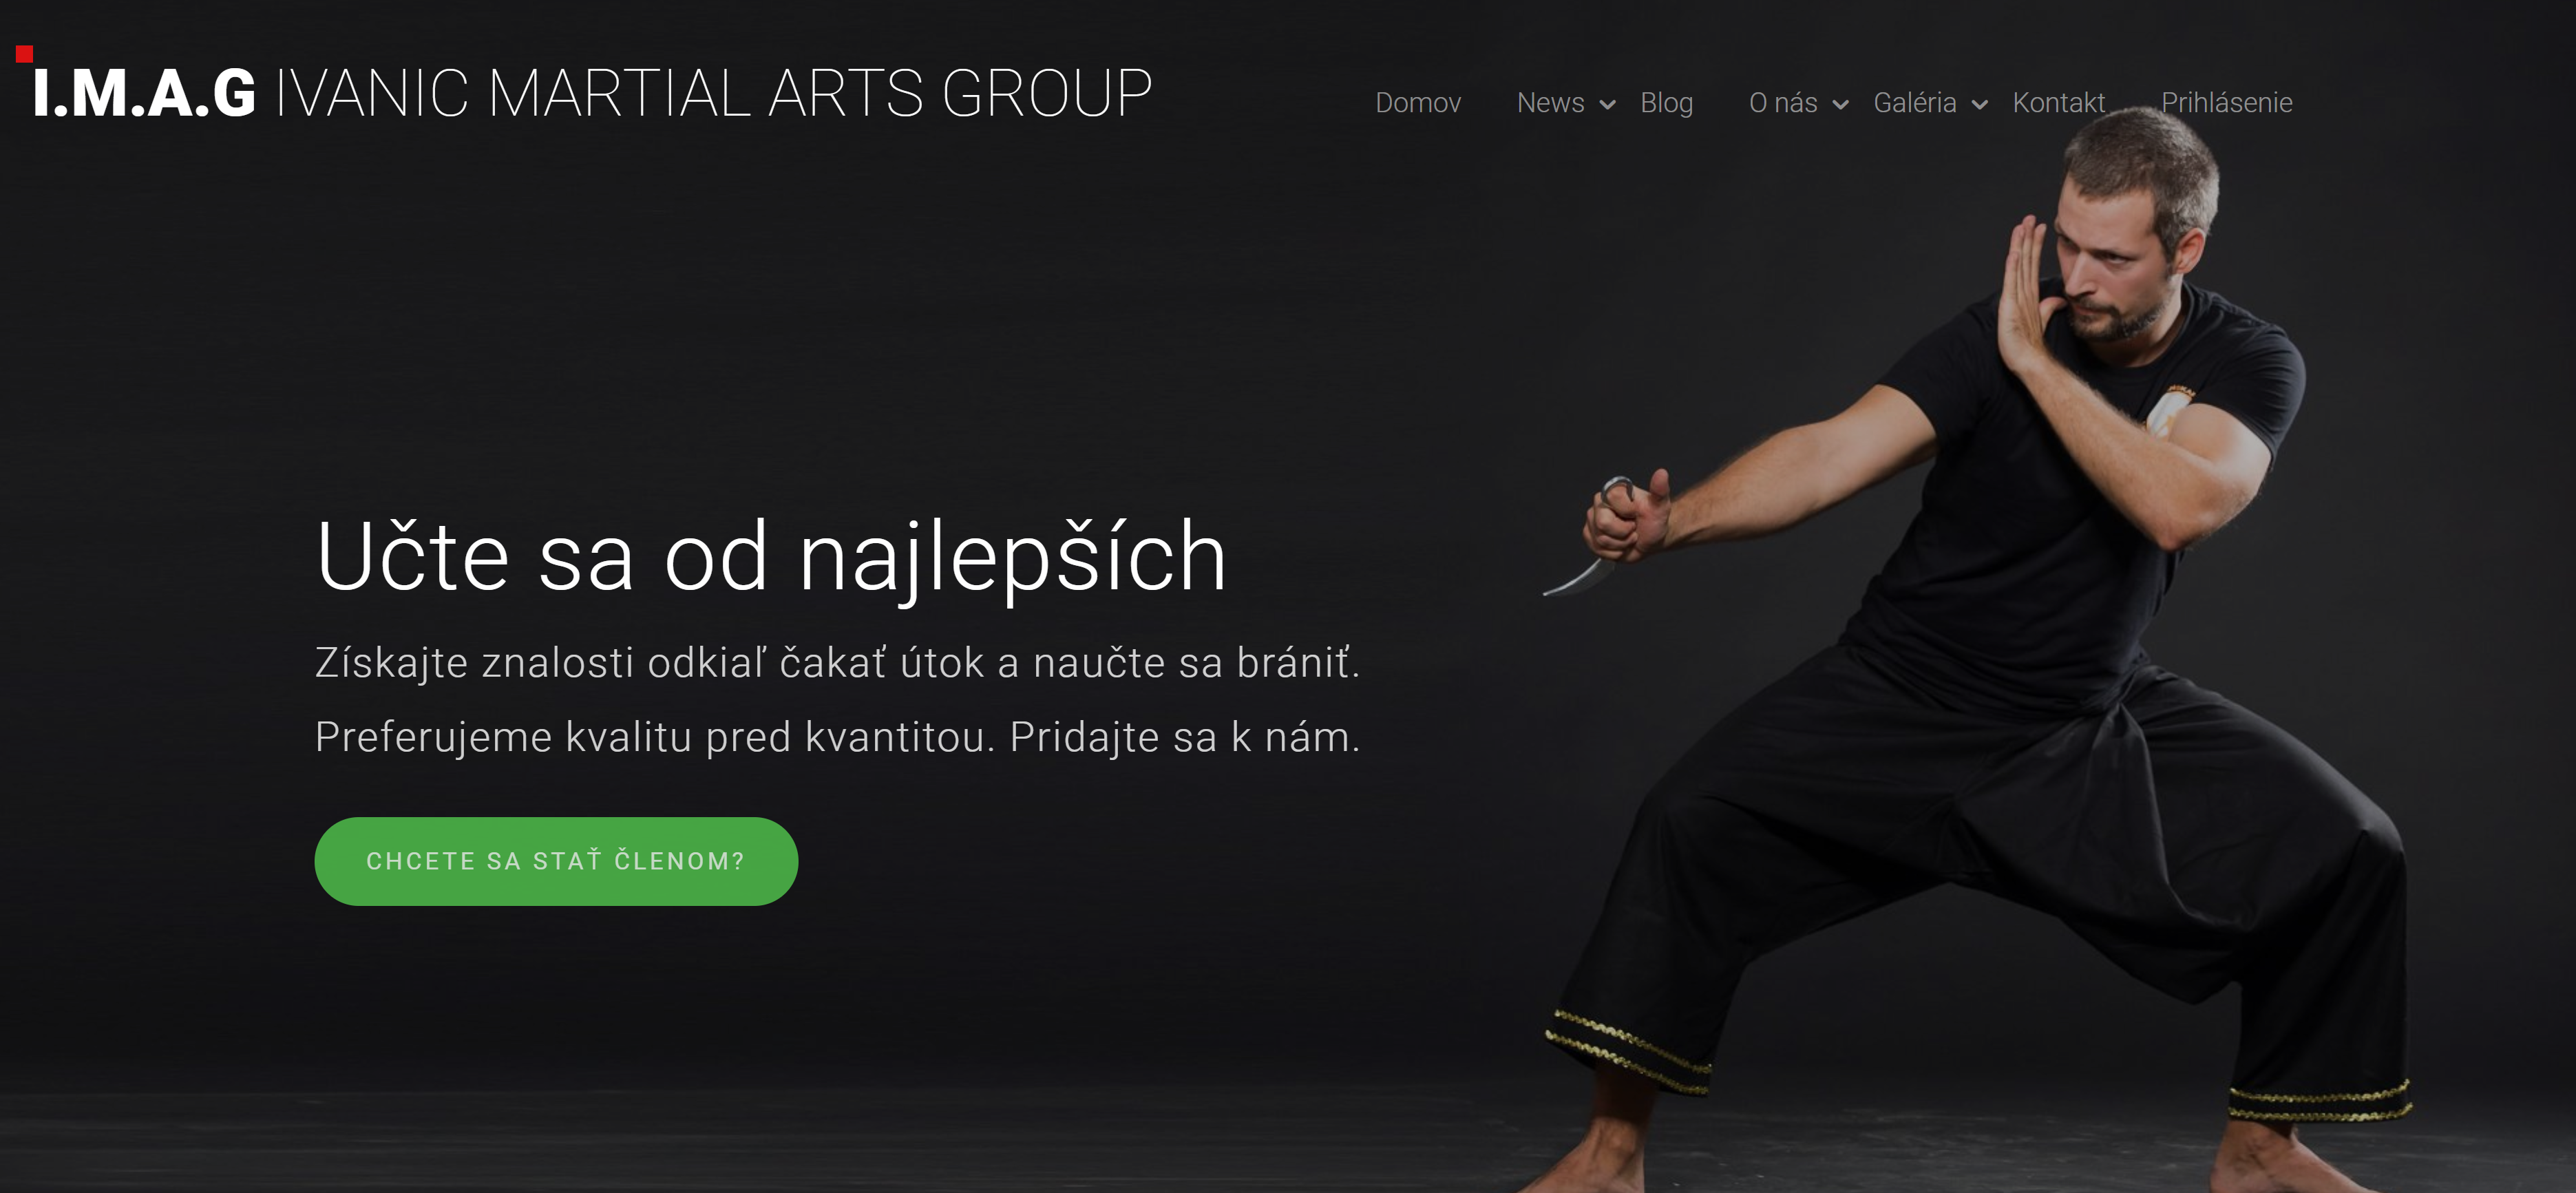 Ivanic Martial Arts Group